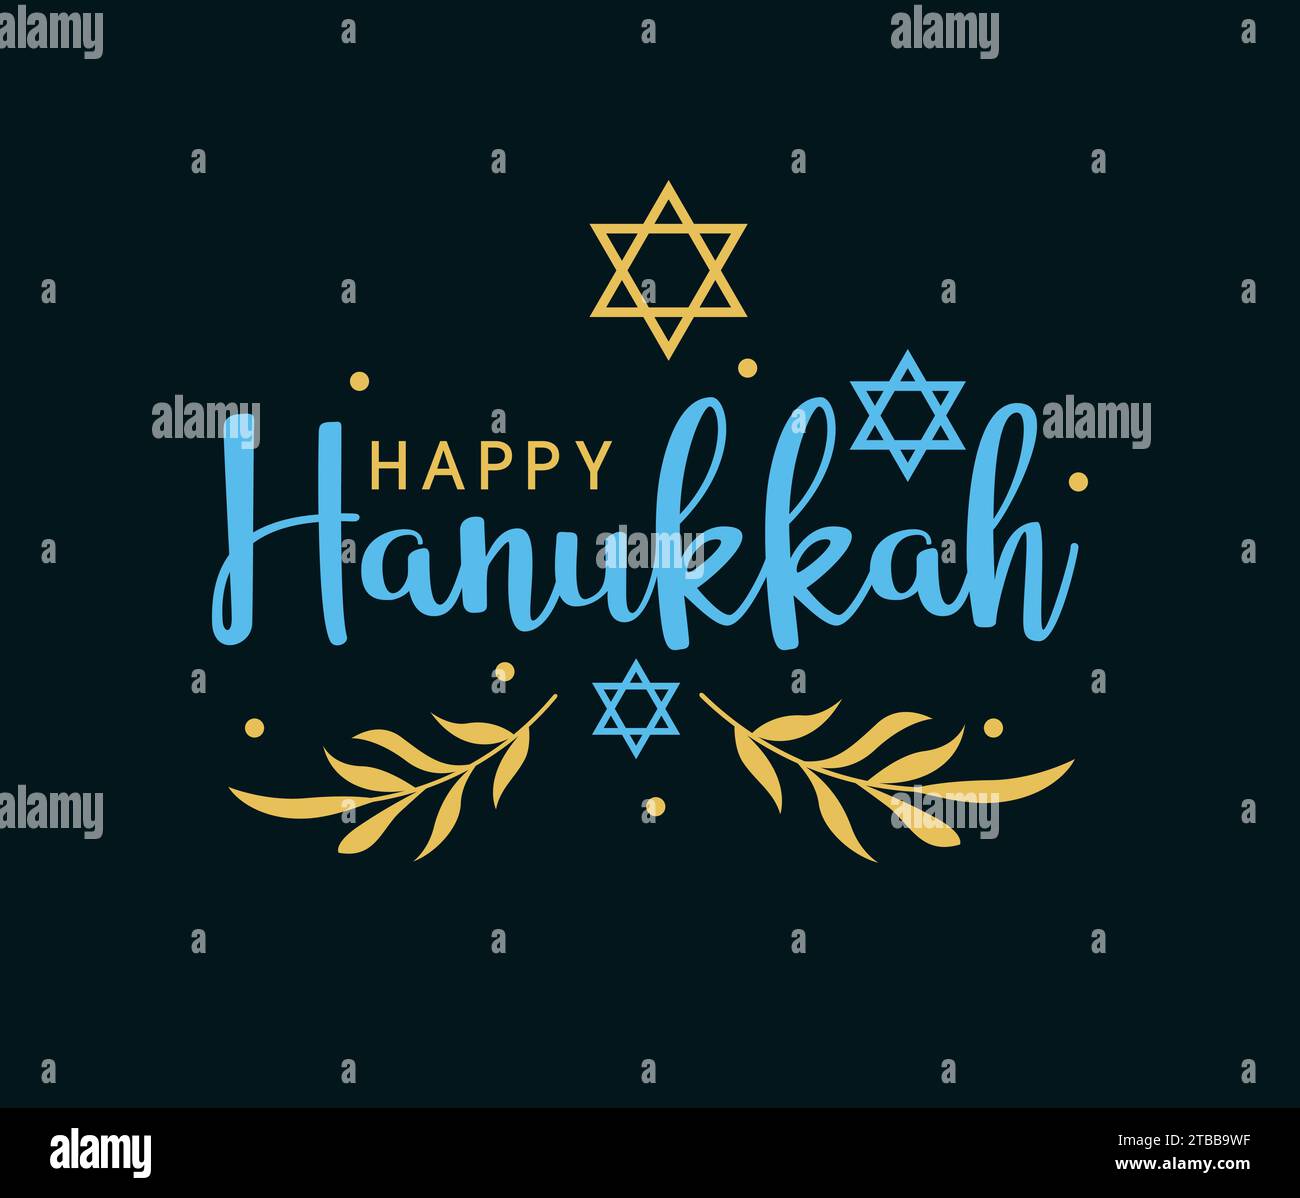 Happy Hanukkah Lettering With Star Of David Stock Vector